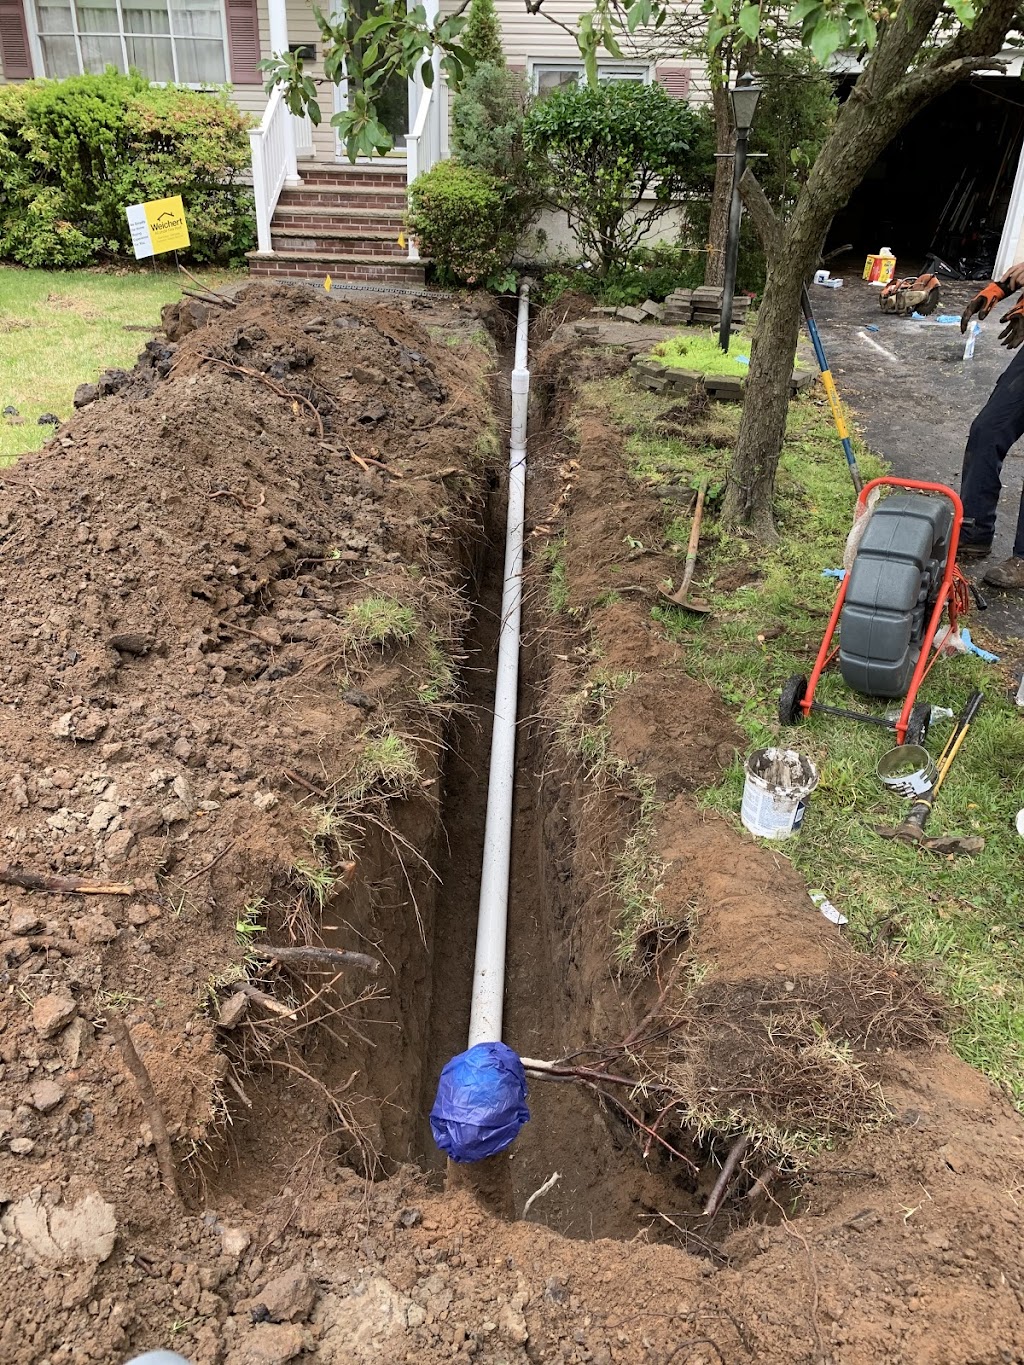 Superior sewer and drains | 2 Rosemont Dr, West Orange, NJ 07052 | Phone: (973) 865-8063